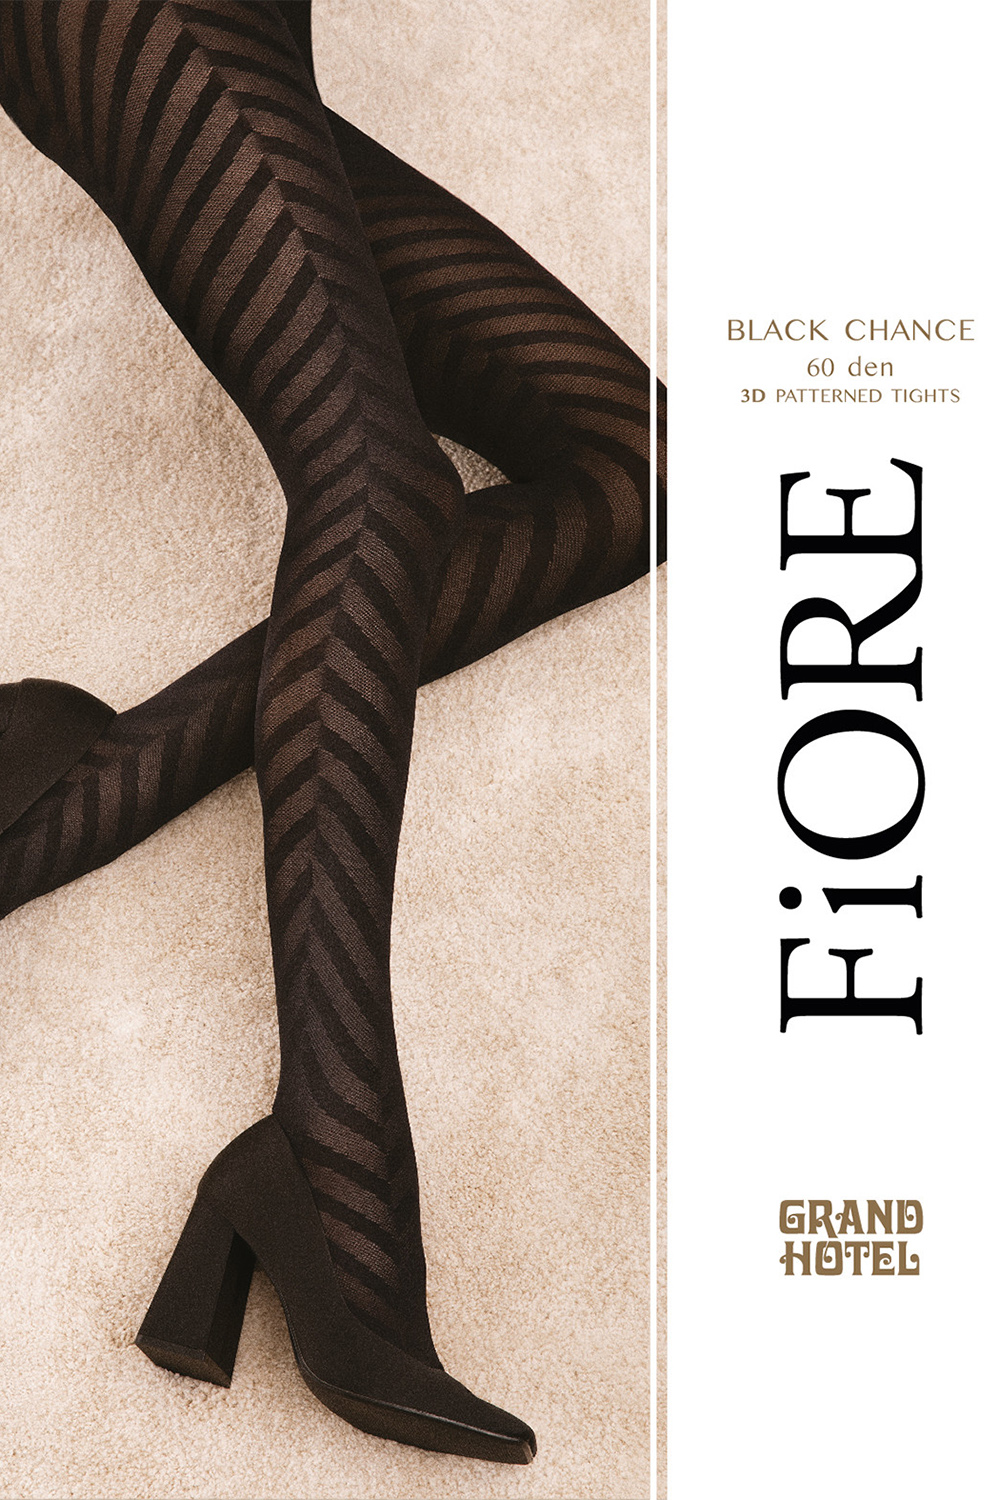 Fiore Black Chanse 60 DEN G6094 - black